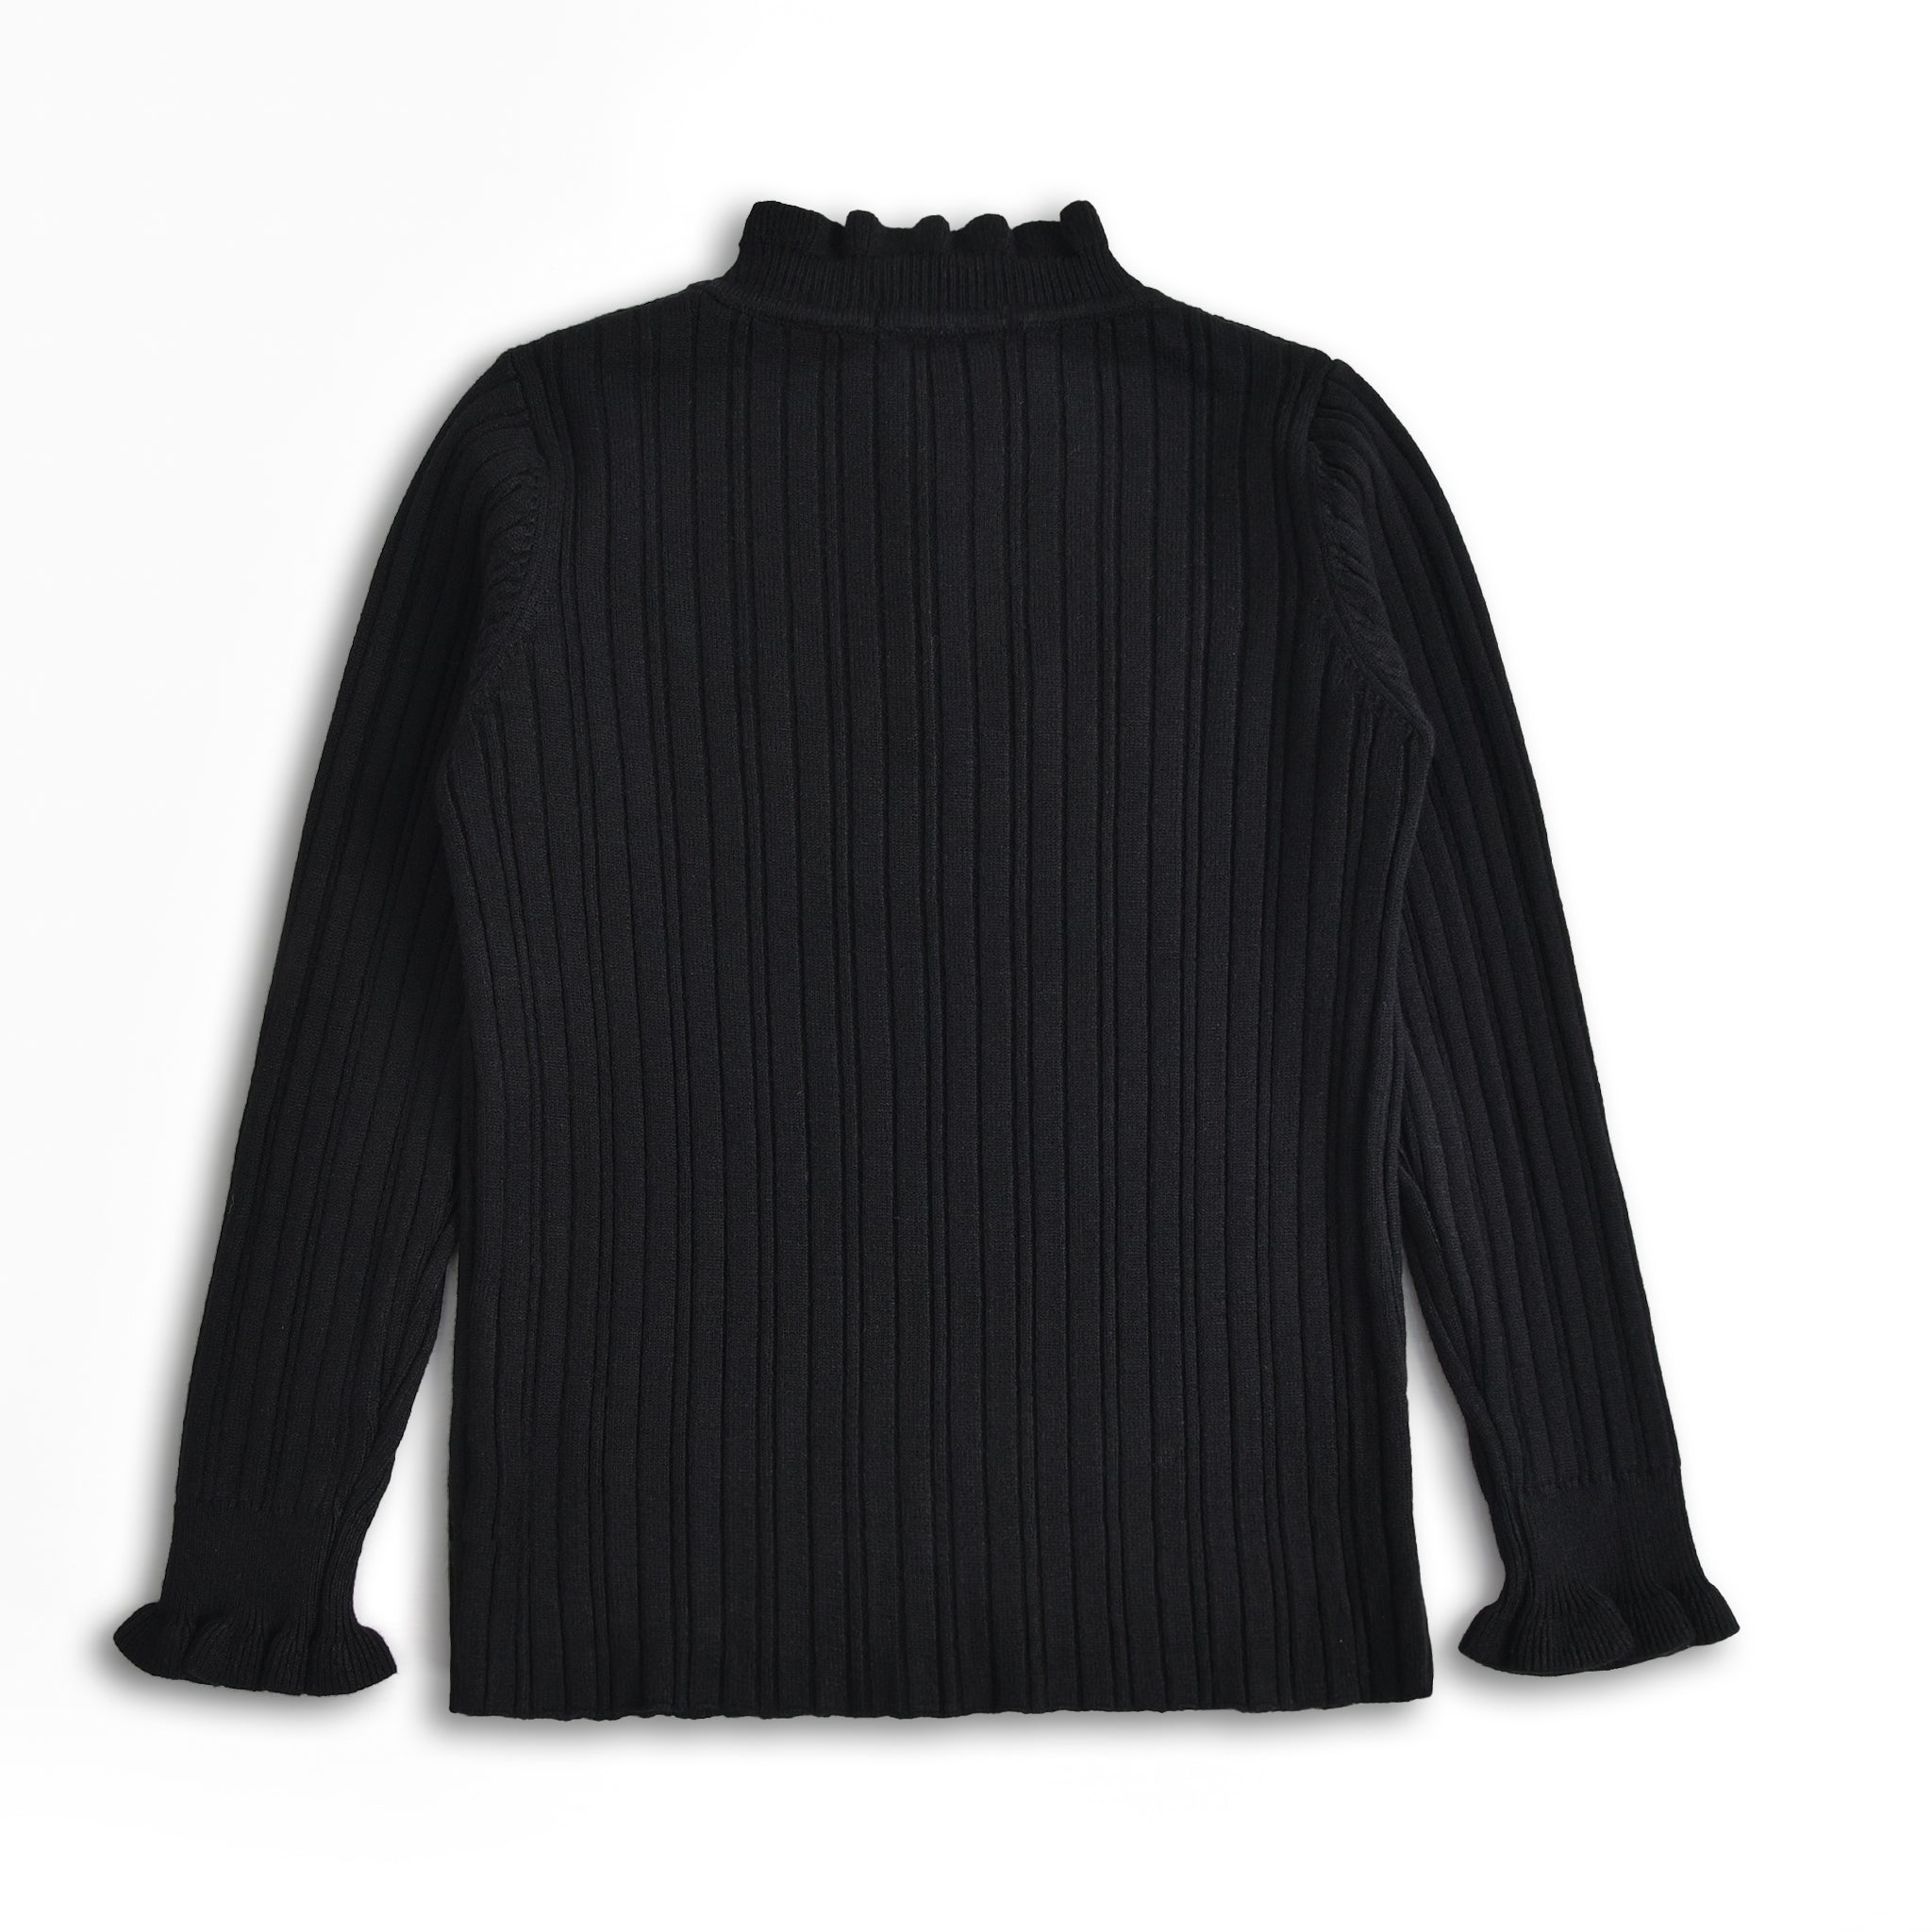 Black Mock Neck Sweater